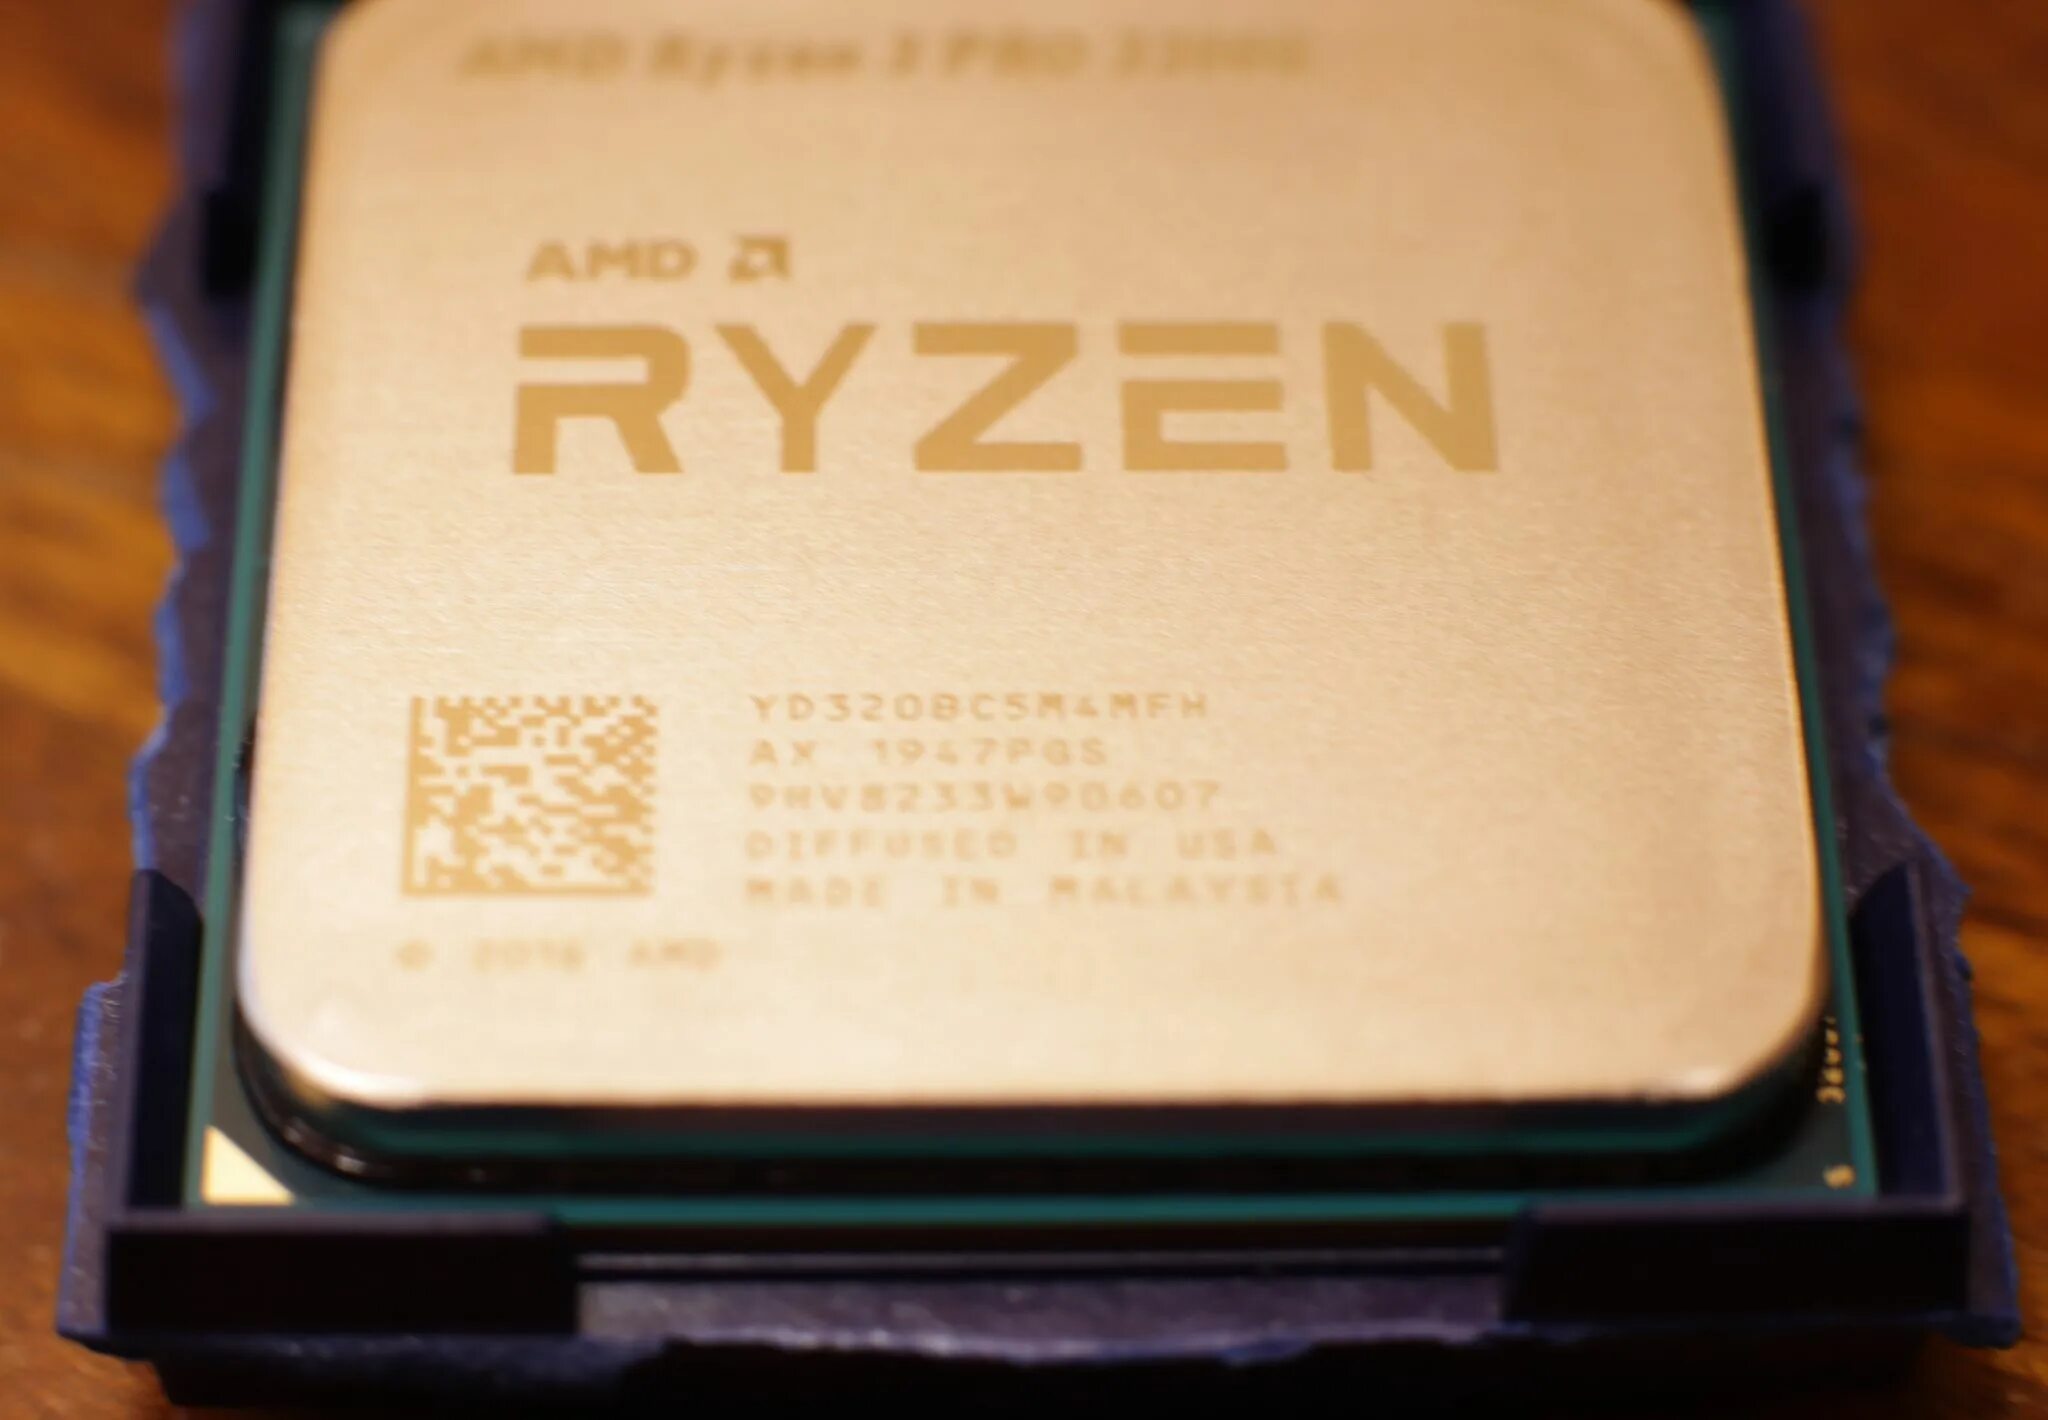 AMD Ryzen 3 Pro 3200g. Процессор AMD Ryzen 3 3200g am4. Ryzen 3 Pro 3200g процессор. Процессор AMD yd320bc5m4mfh. 3 pro 3200g